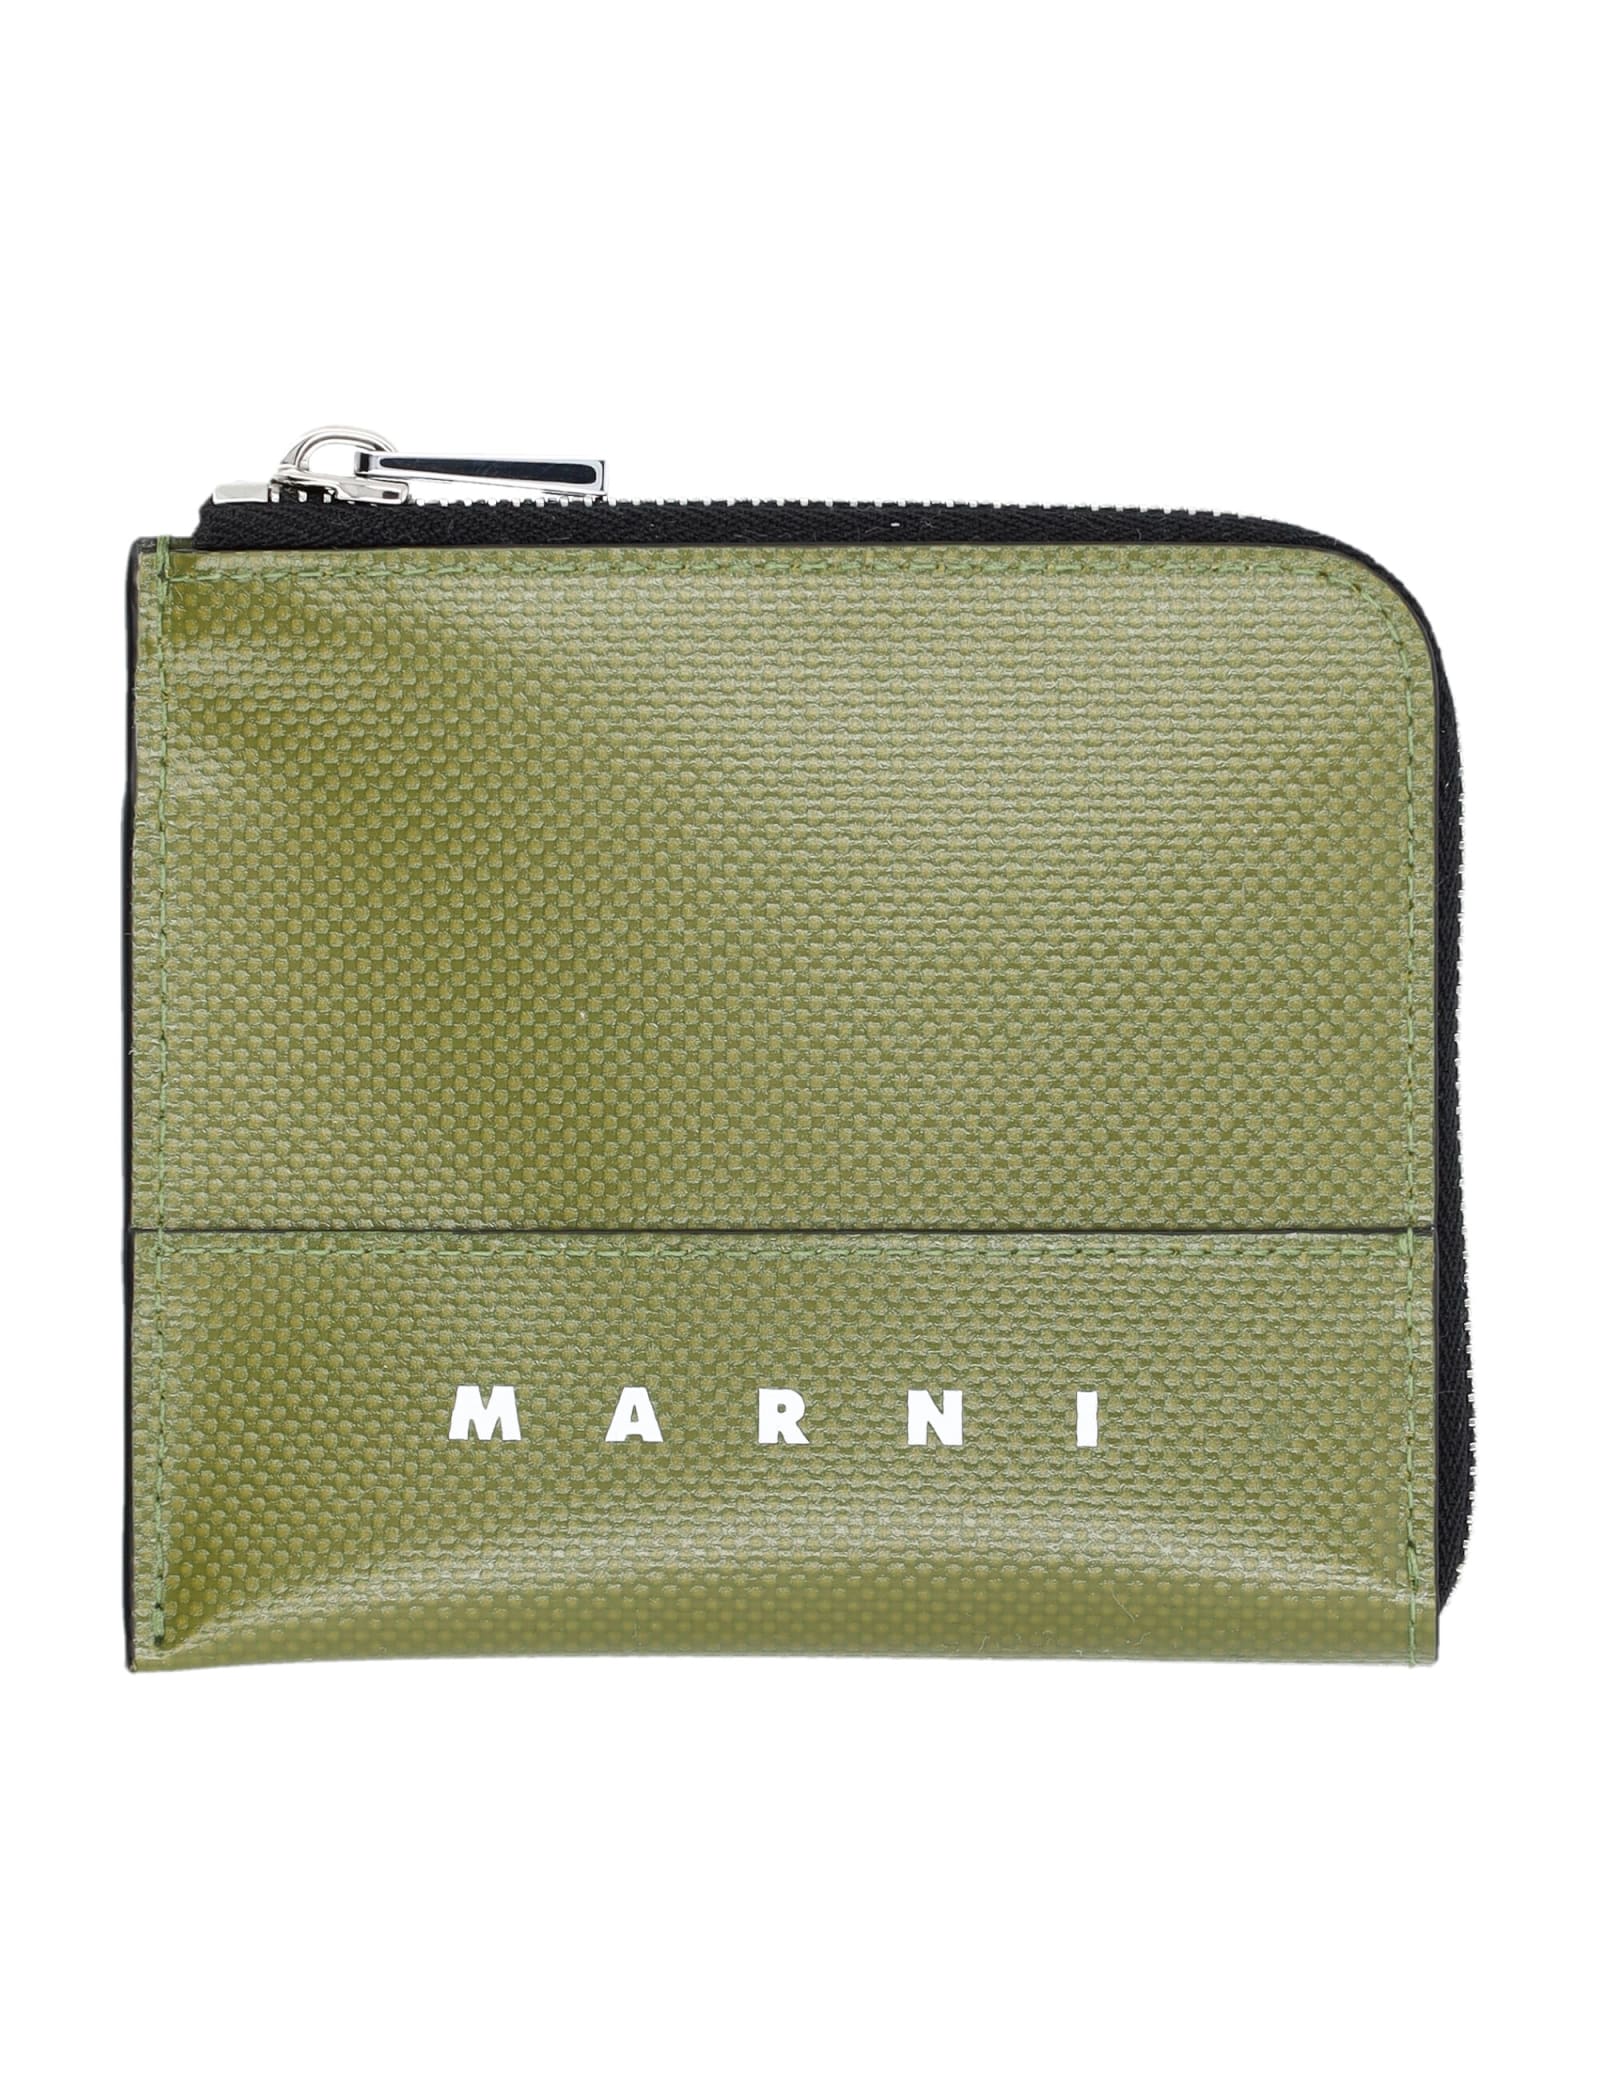 Marni Zip Wallet In Military Green